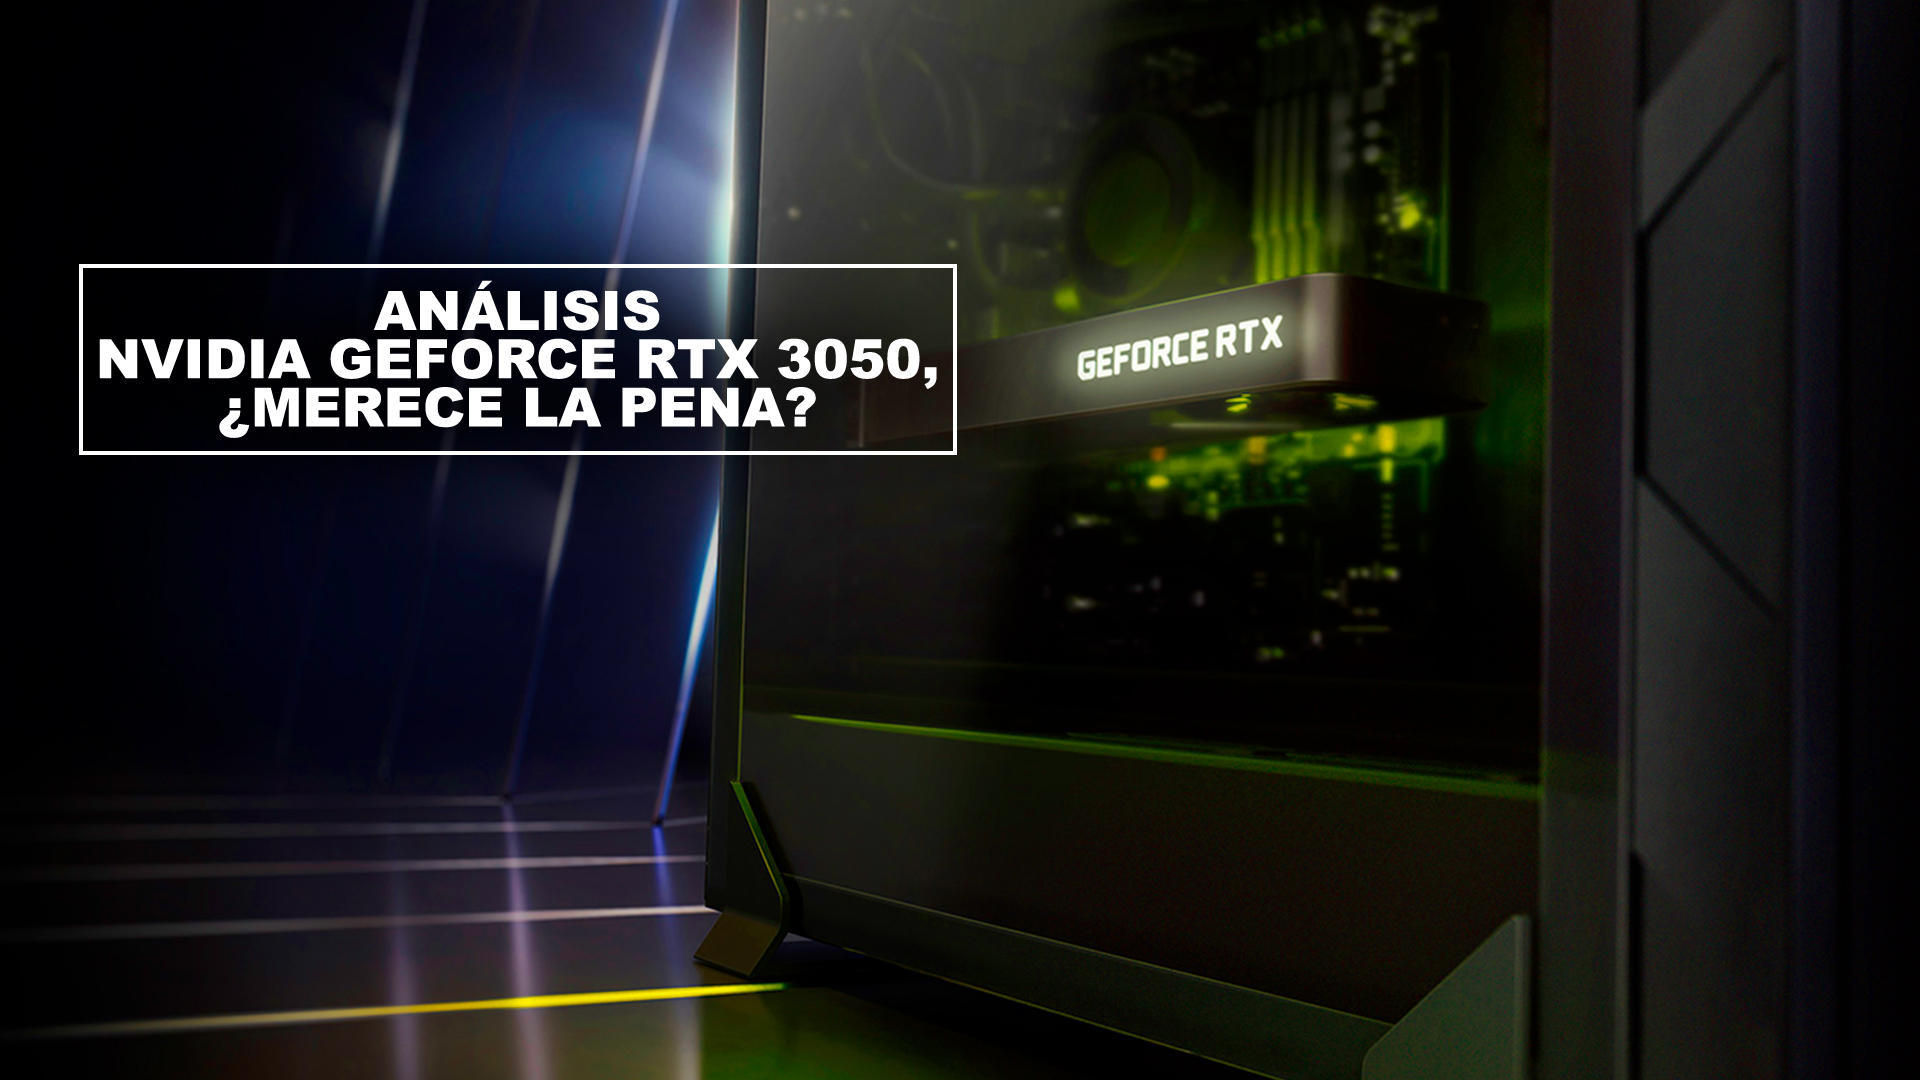 Anlisis NVIDIA GeForce RTX 3050, merece la pena?